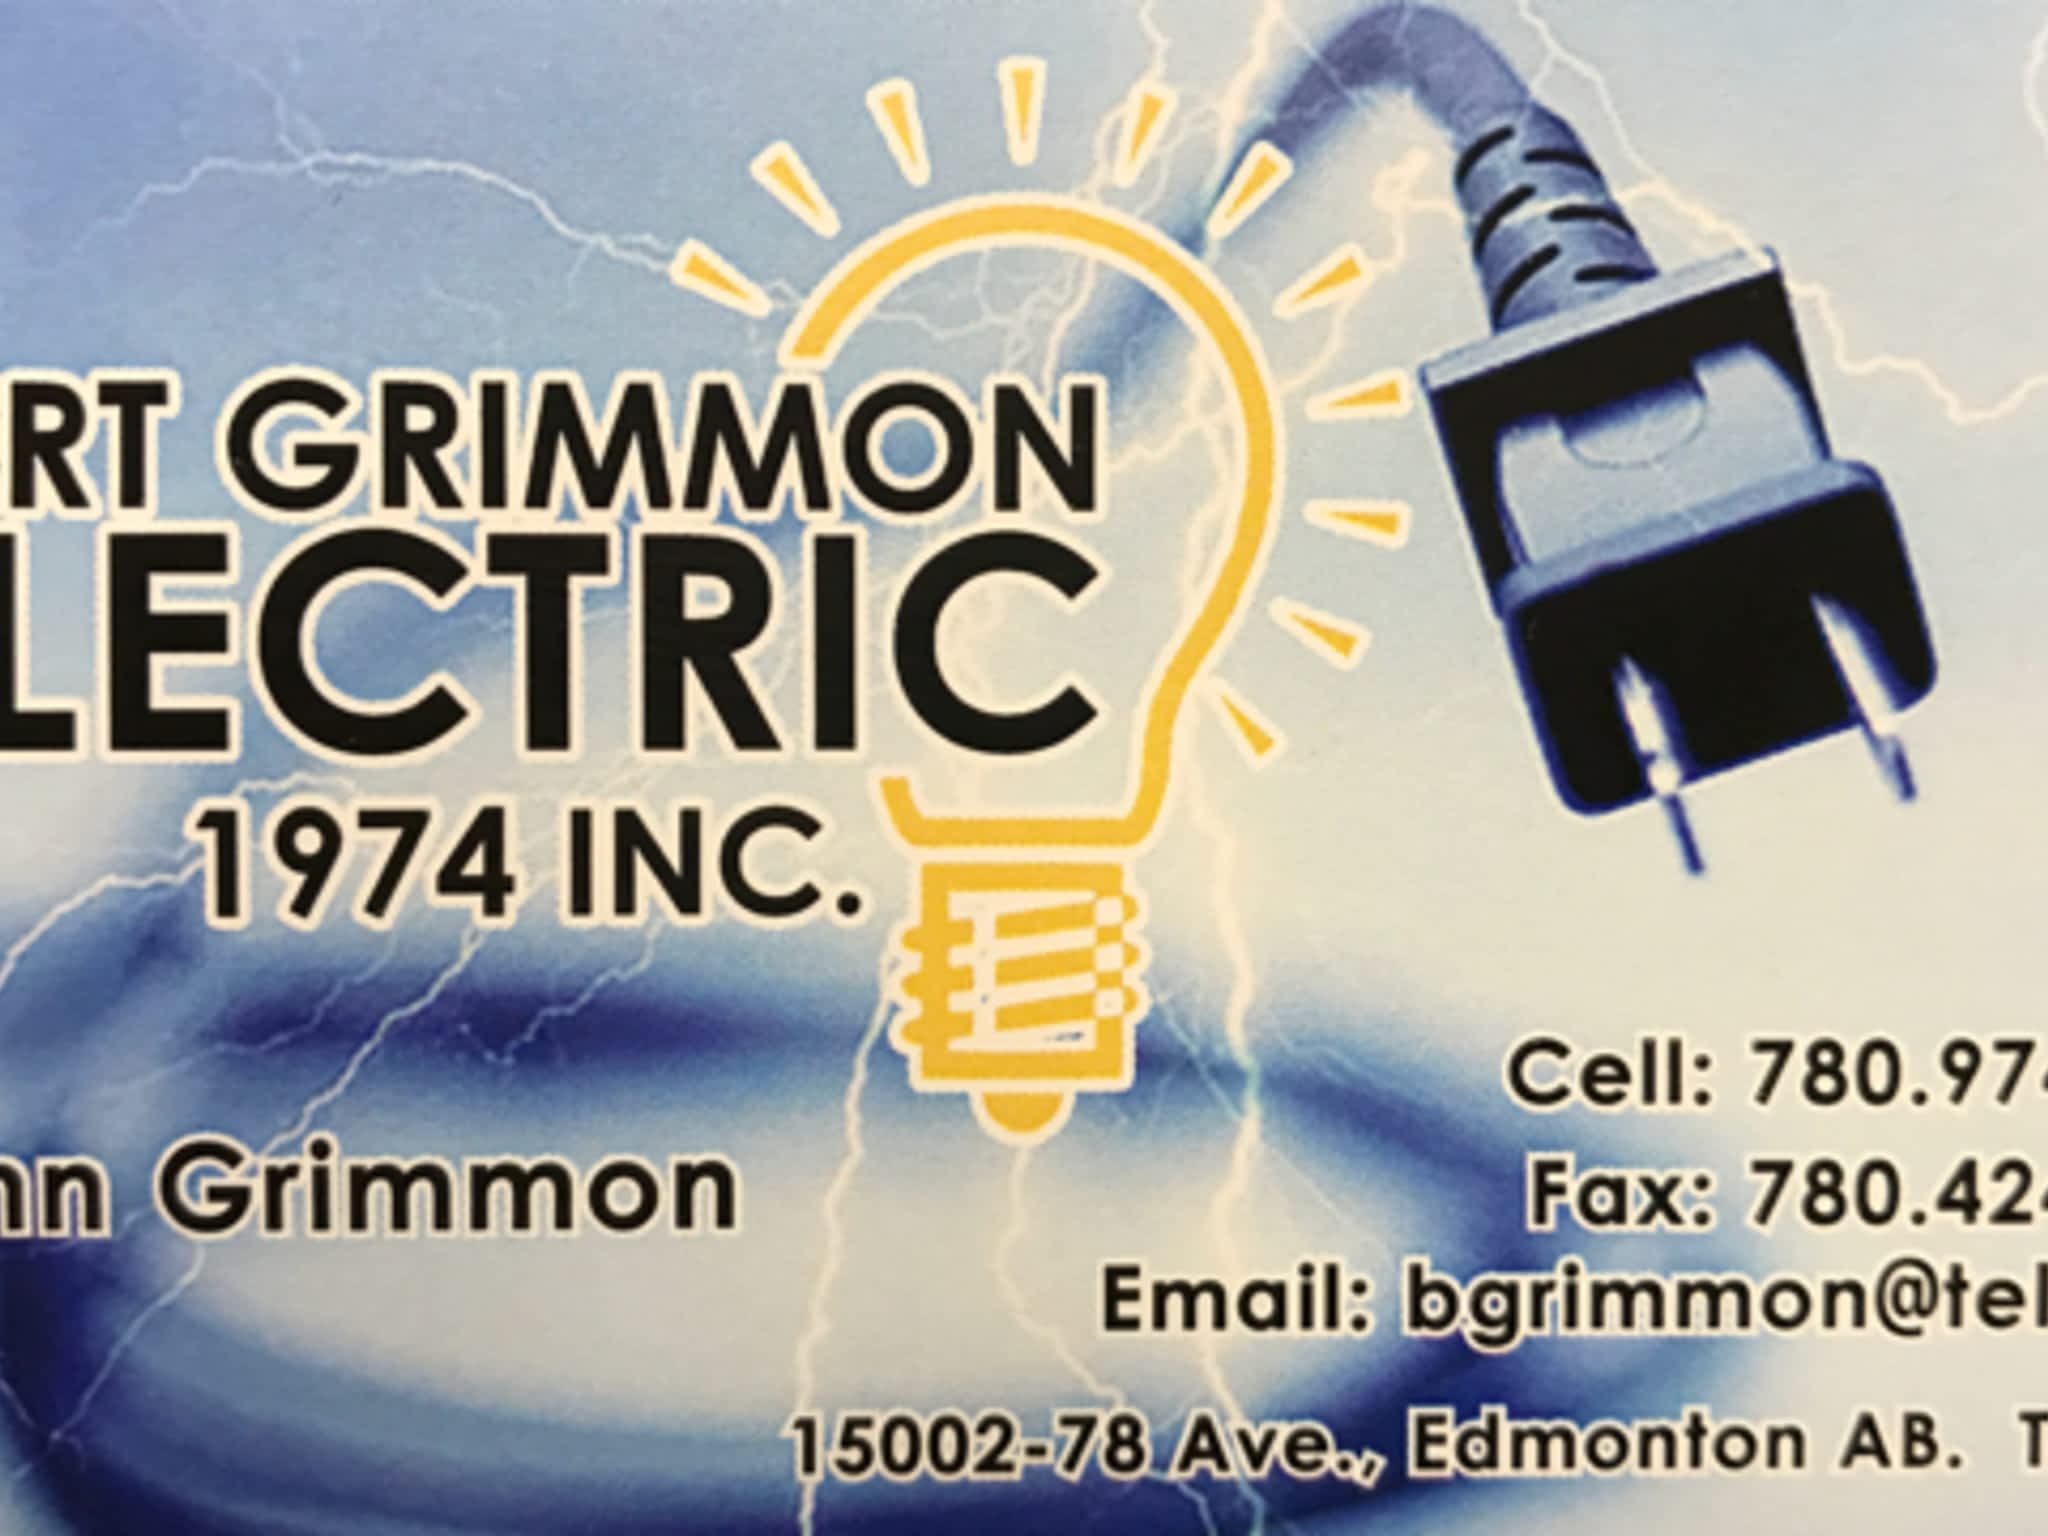 photo Bert Grimmon Electric 1974 Inc